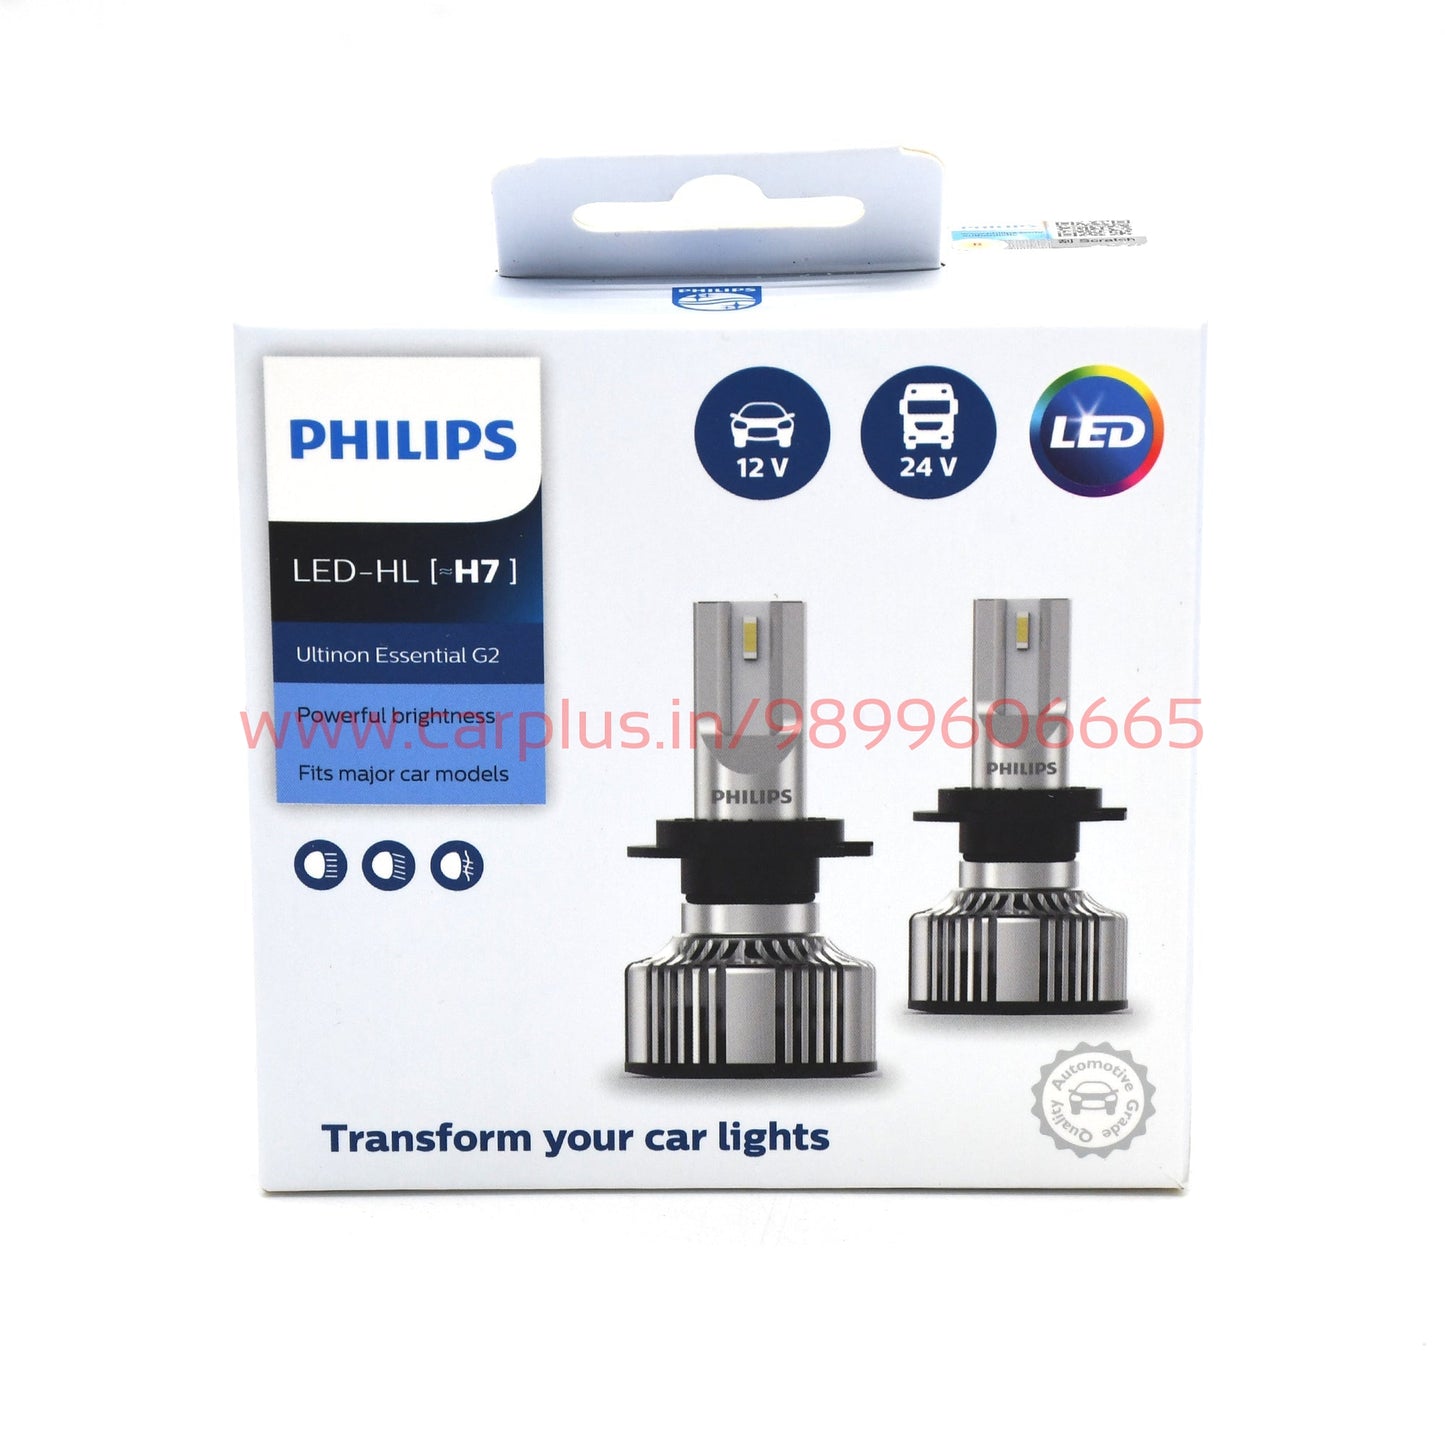 Philips Ultinon Essential G2 LED Headlight Kit - H7